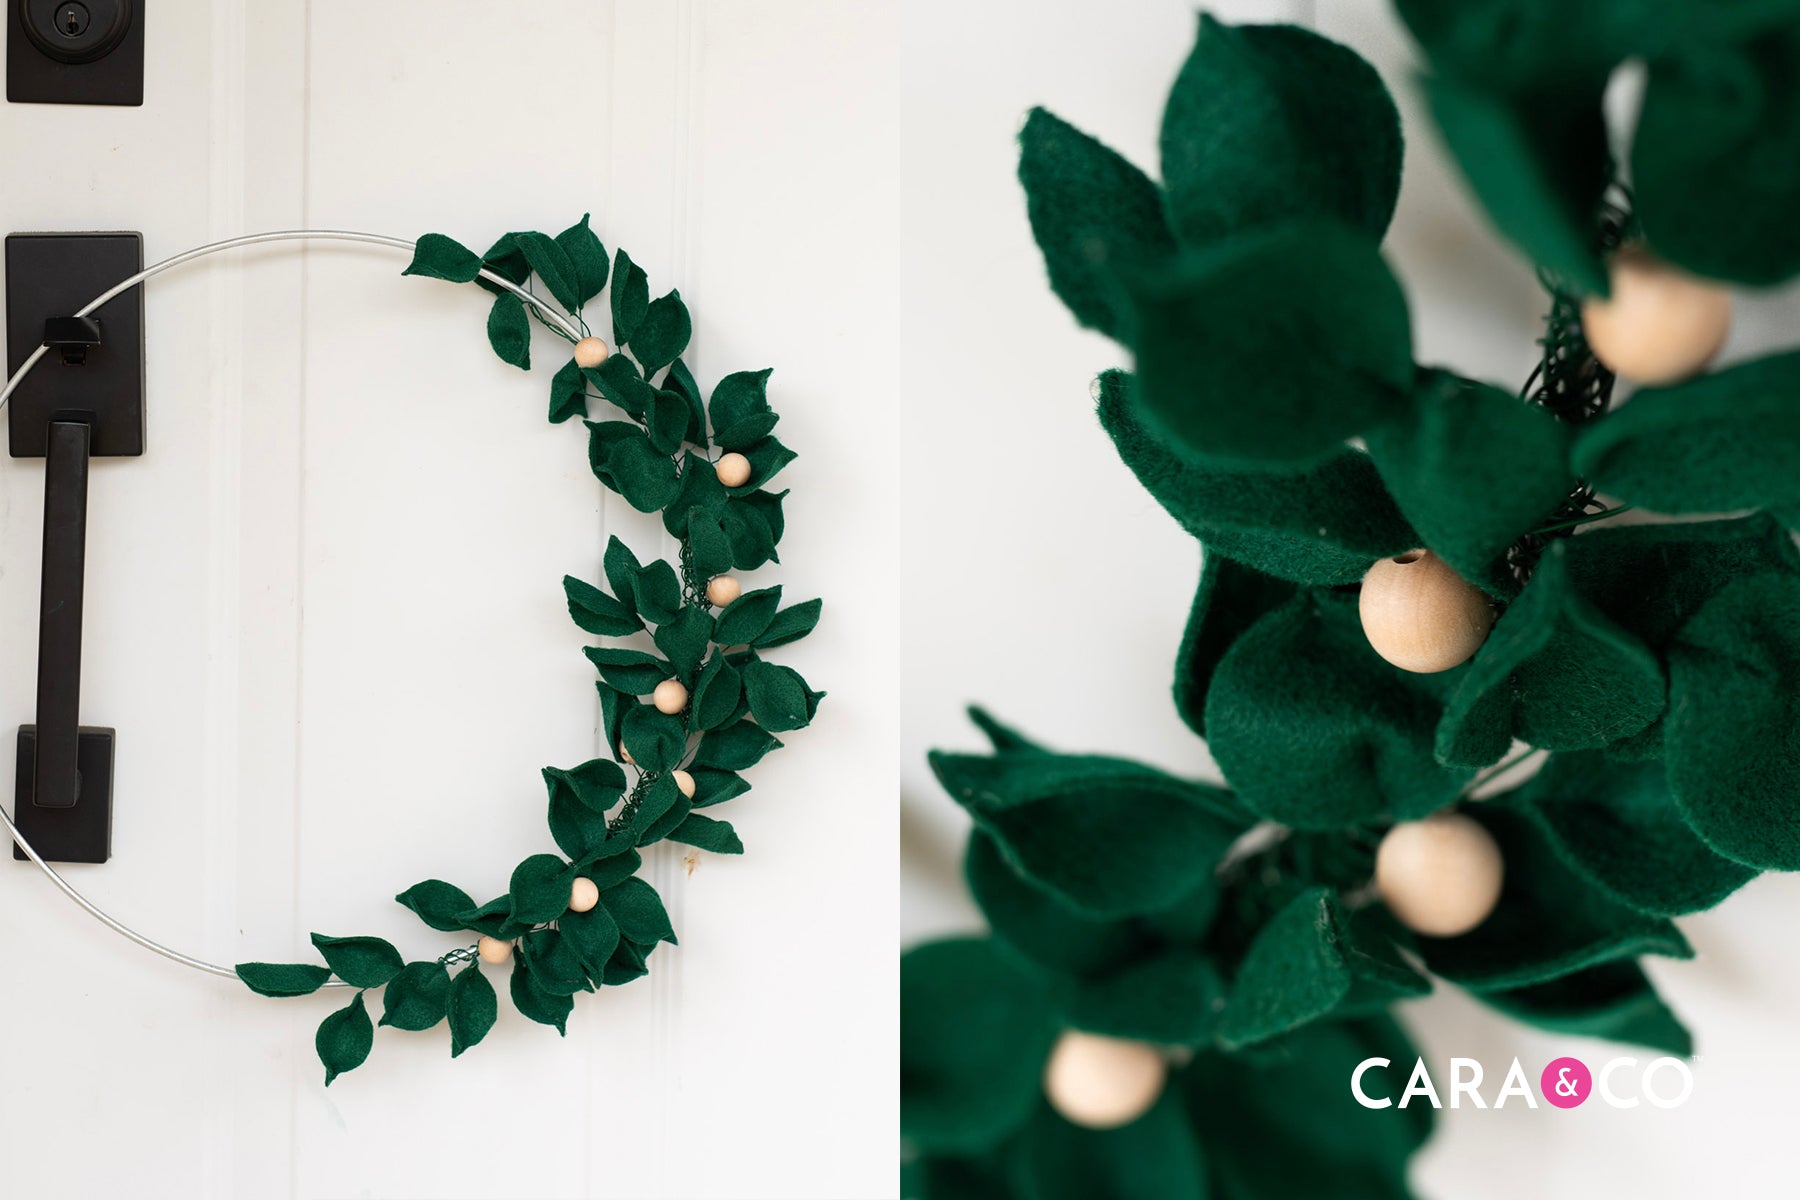 Minimalistic Christmas / Winter Wreath - Cara & Co